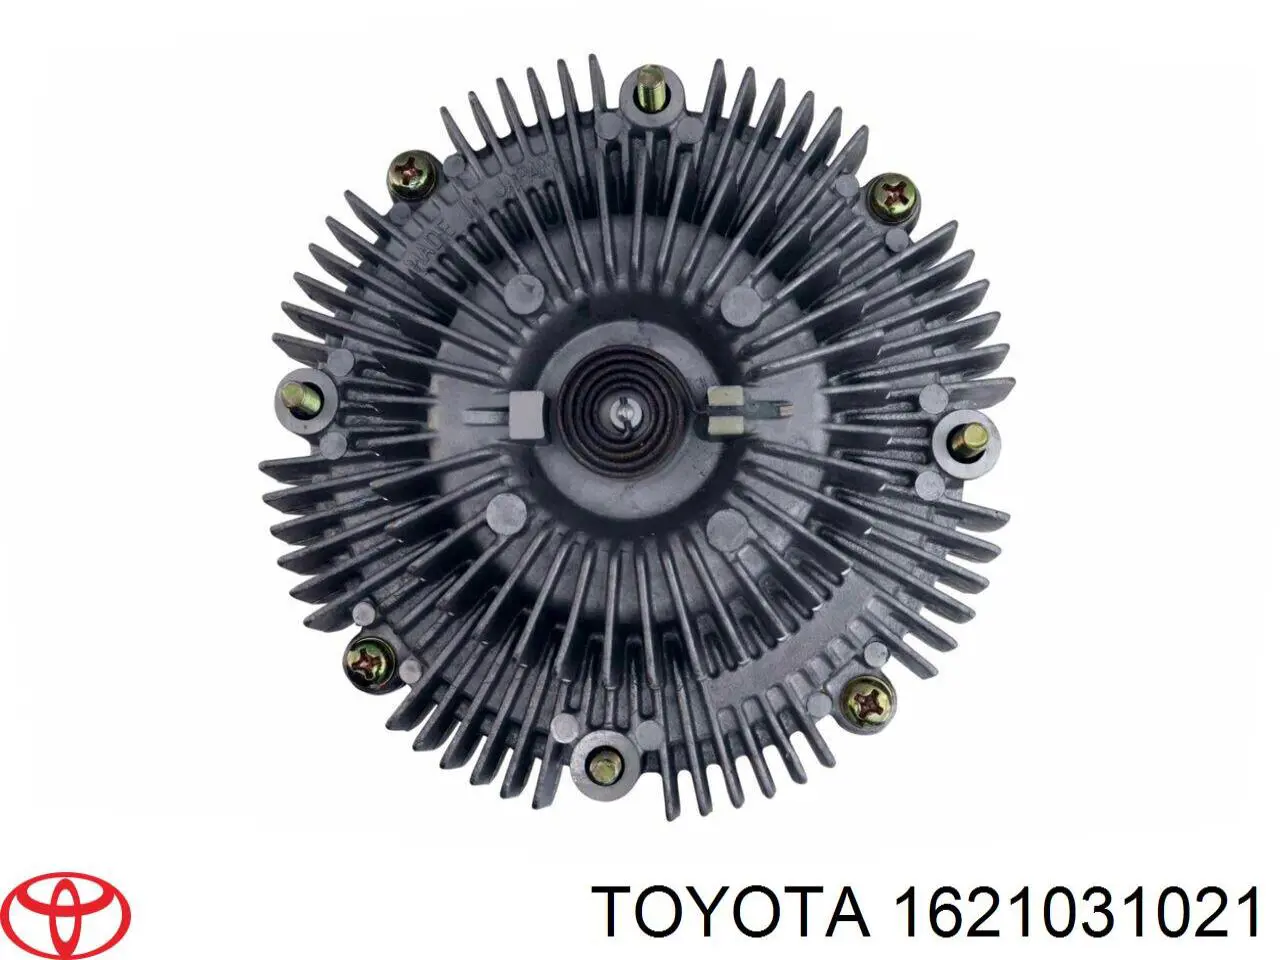 Вискомуфта (вязкостная муфта) вентилятора охлаждения Toyota 1621031021